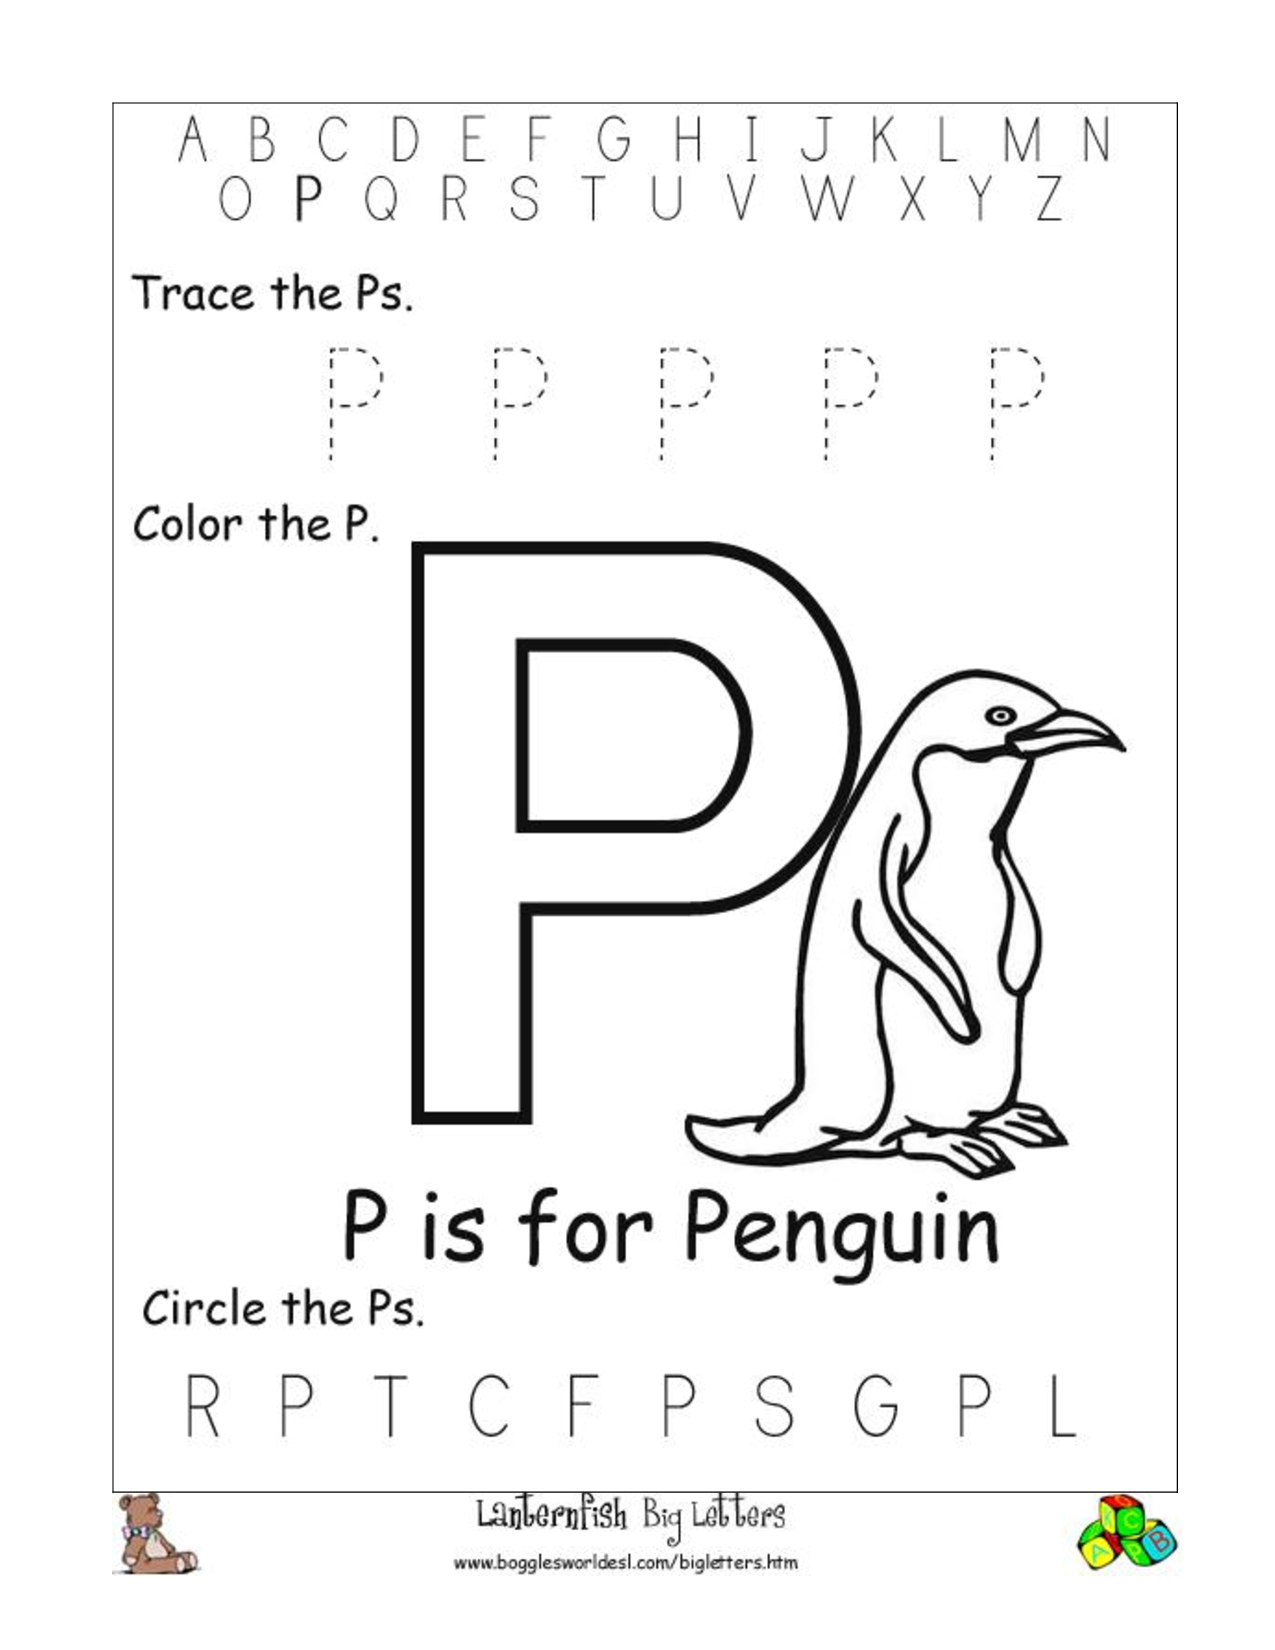 4-best-images-of-letter-p-printables-printable-letter-p-worksheets